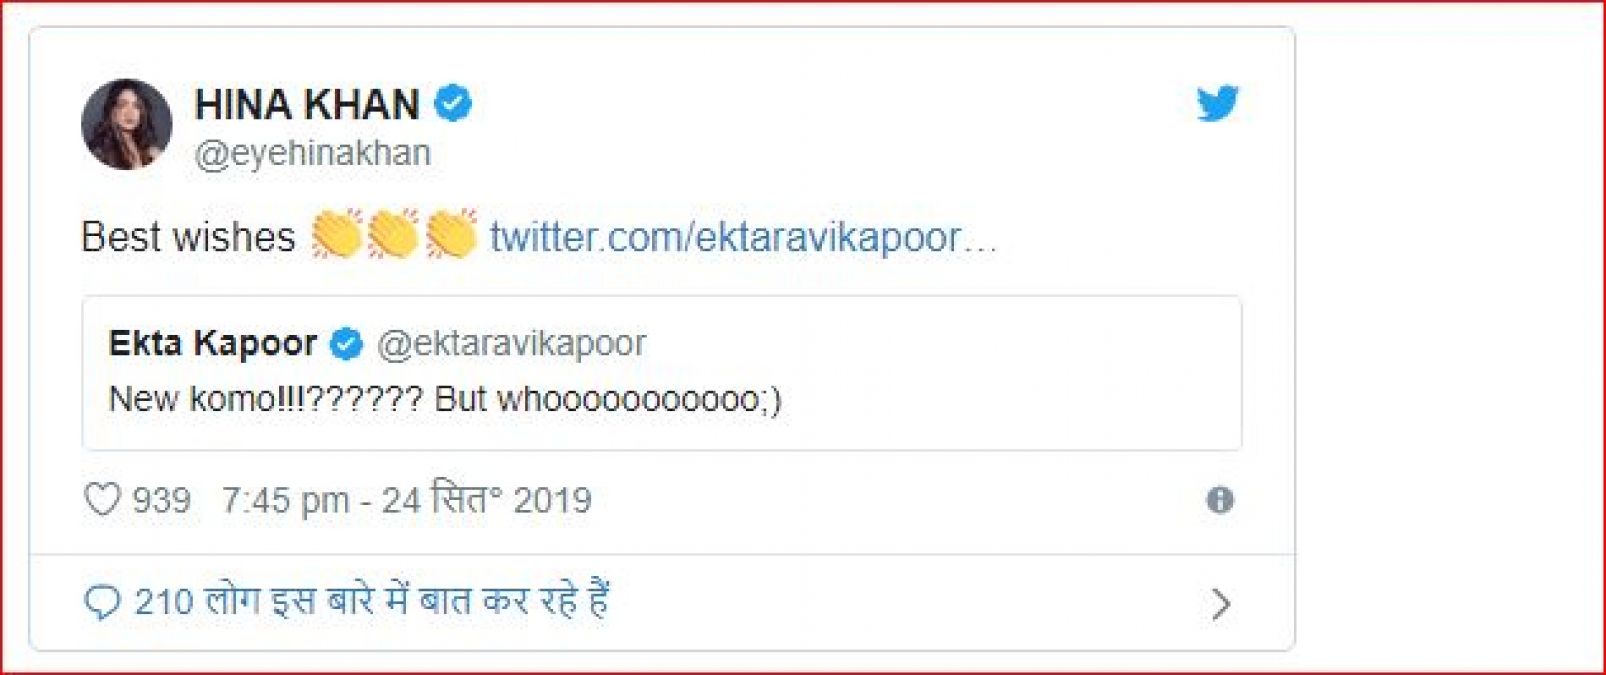 Hina Khan tweeted as soon as she heard the news of new KomoliKa